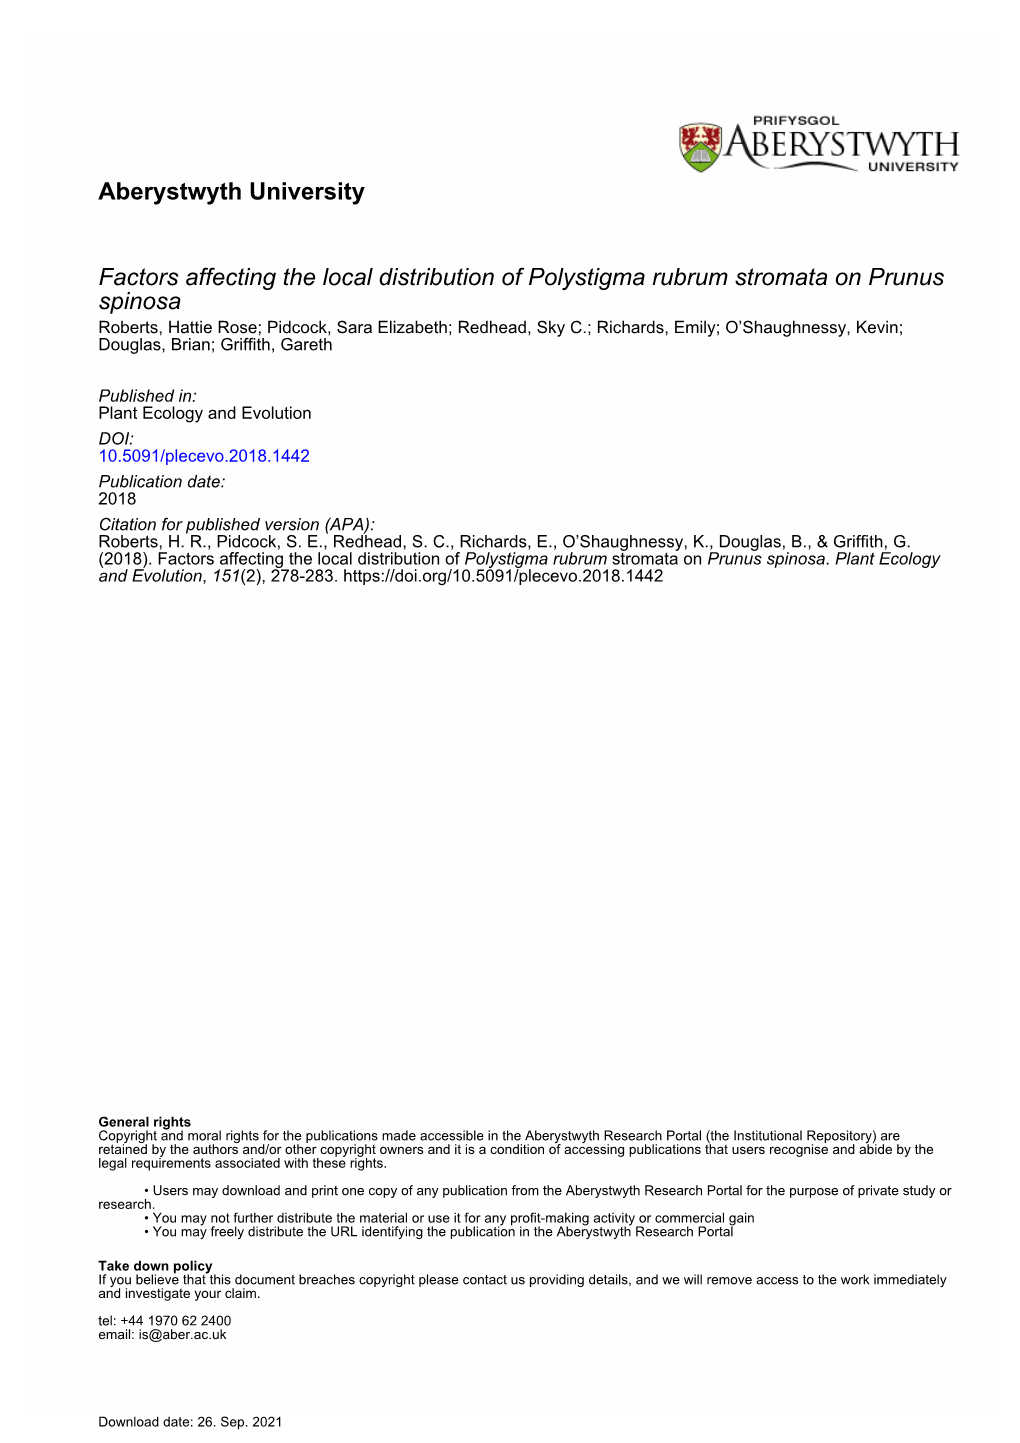 Factors Affecting the Local Distribution of Polystigma Rubrum Stromata On